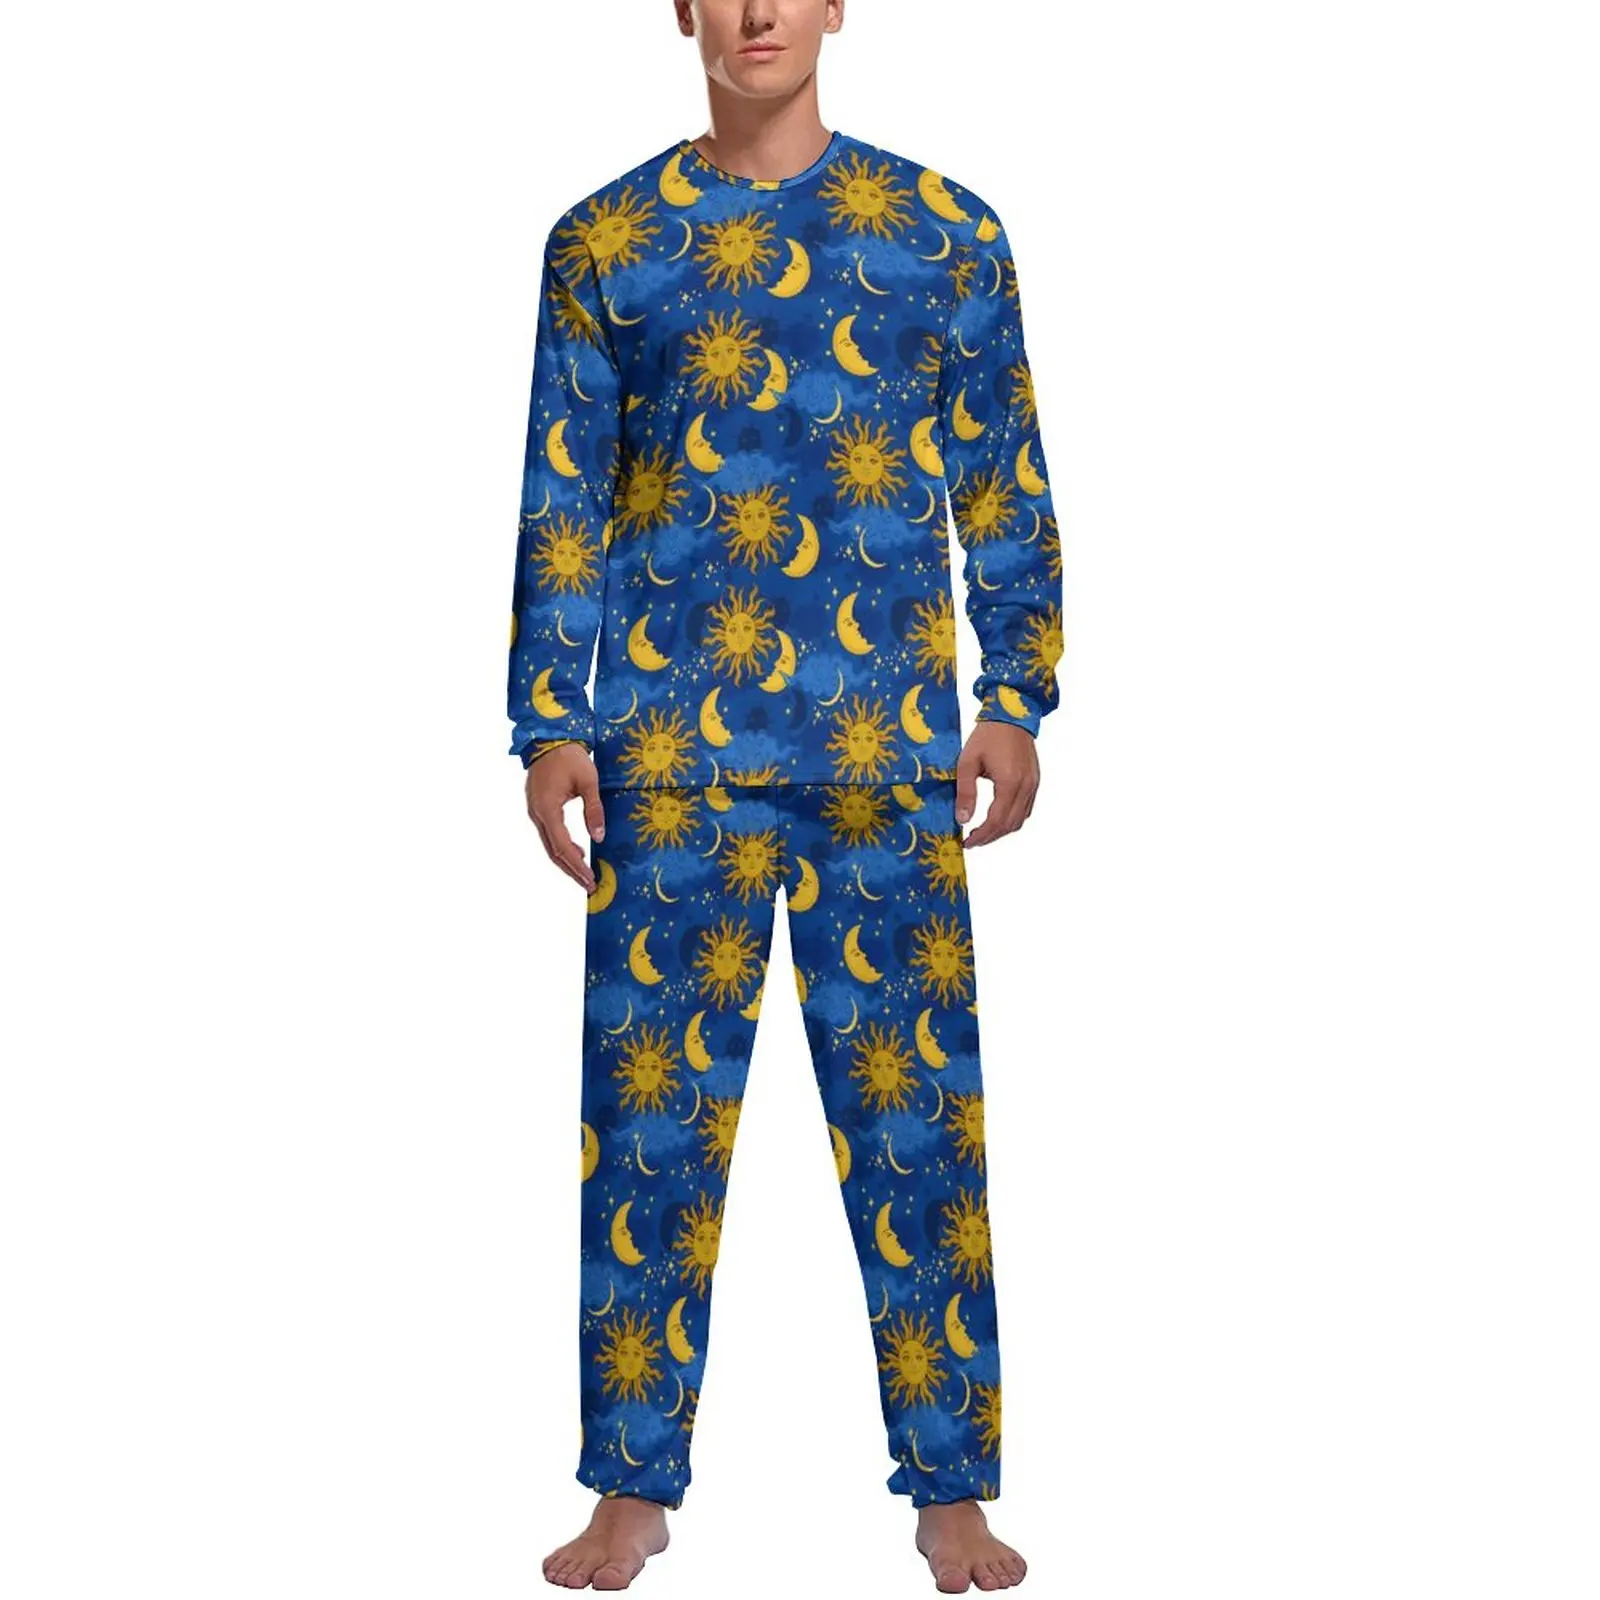 

Stars Sun Moon Celestial Pajamas Daily 2 Piece Blue And Gold Cool Pajama Sets Man Long Sleeve Casual Pattern Nightwear